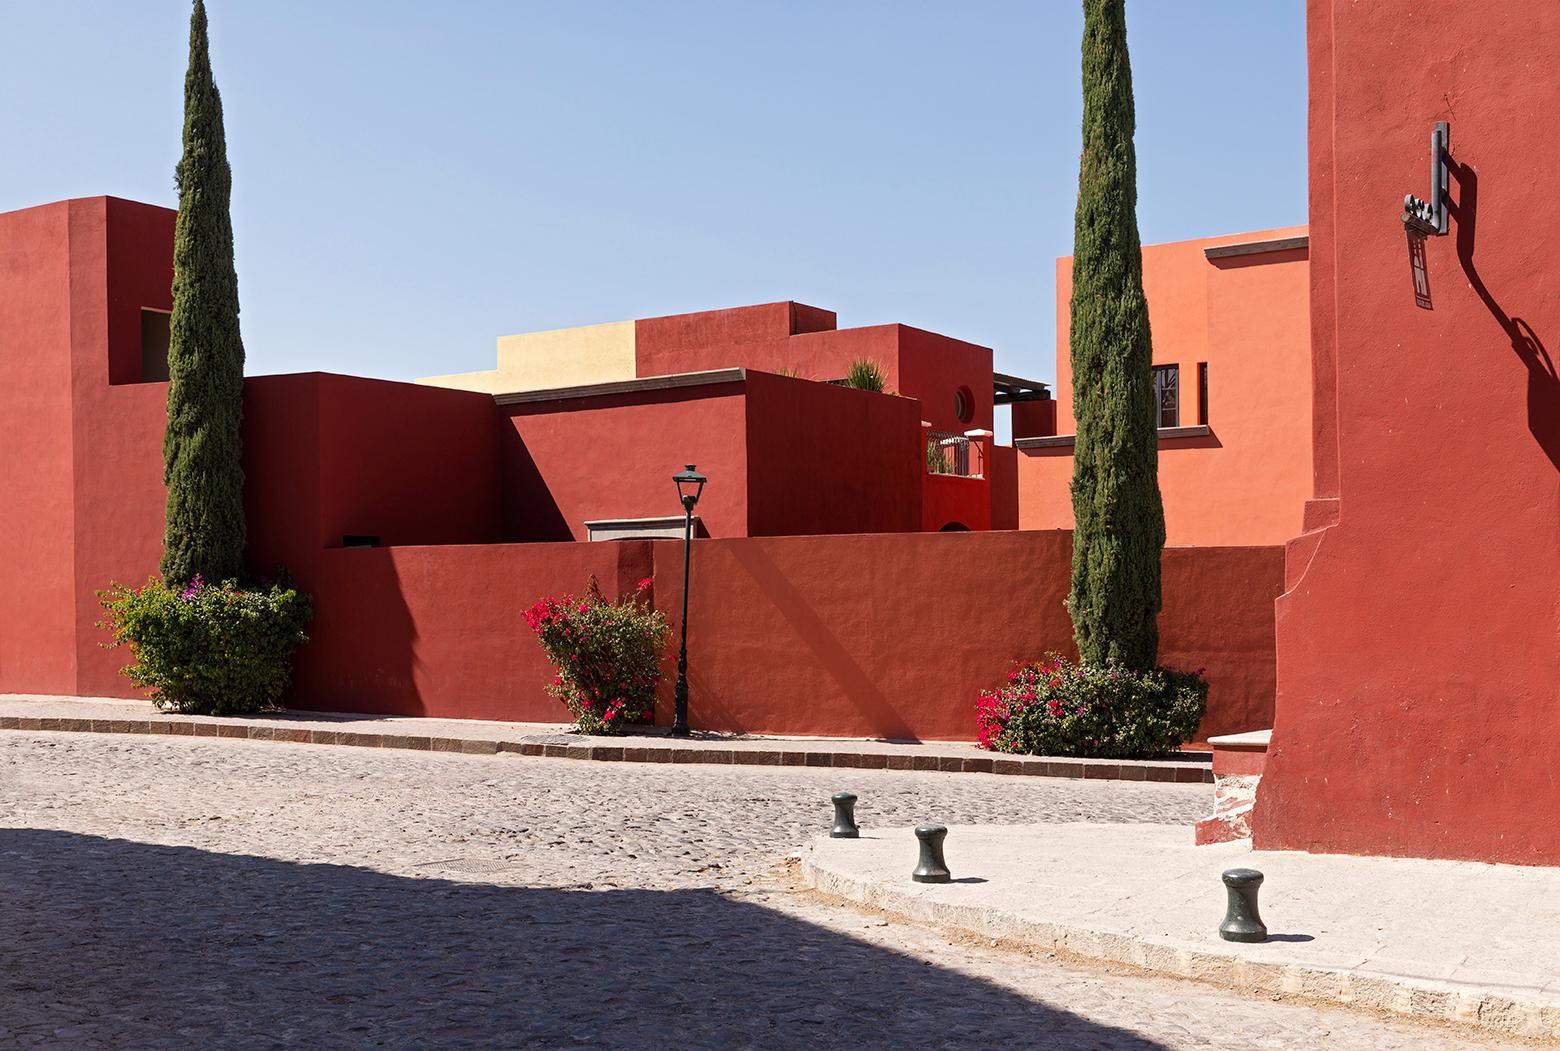  Cosmo Condina Landscape Photograph - Architectural Study of Adobe Buildings, San Miguel de Allende, Mexico, 2020